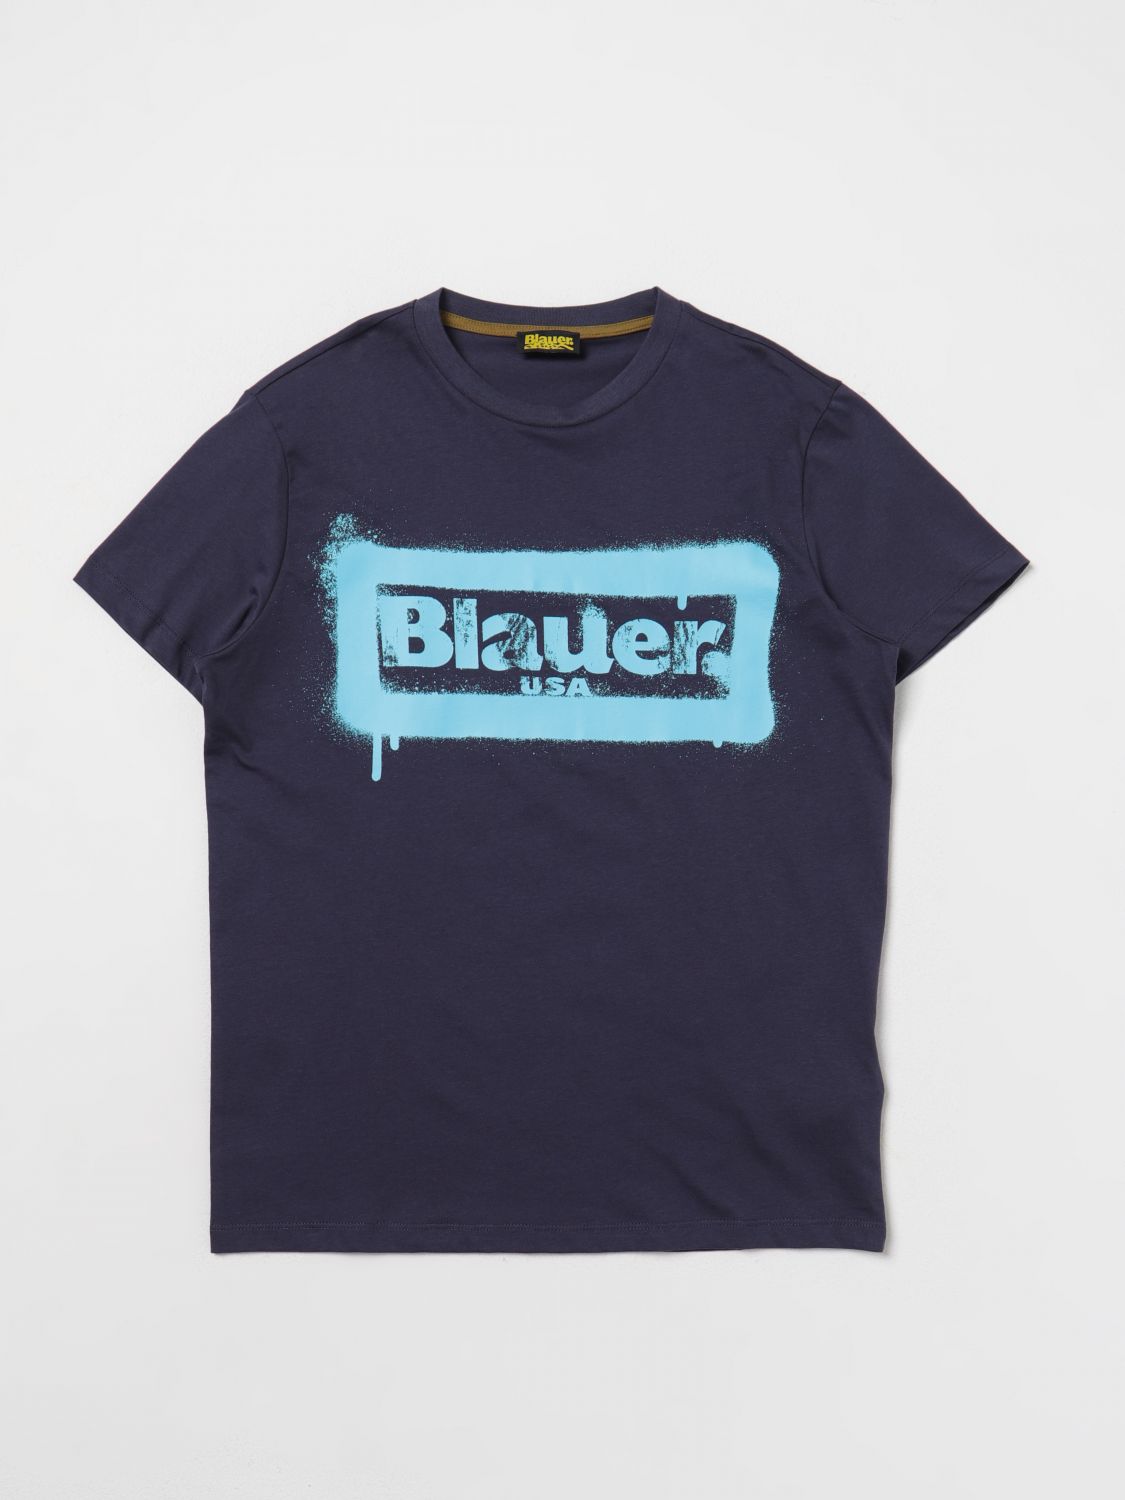 t-shirt blauer kids colour blue